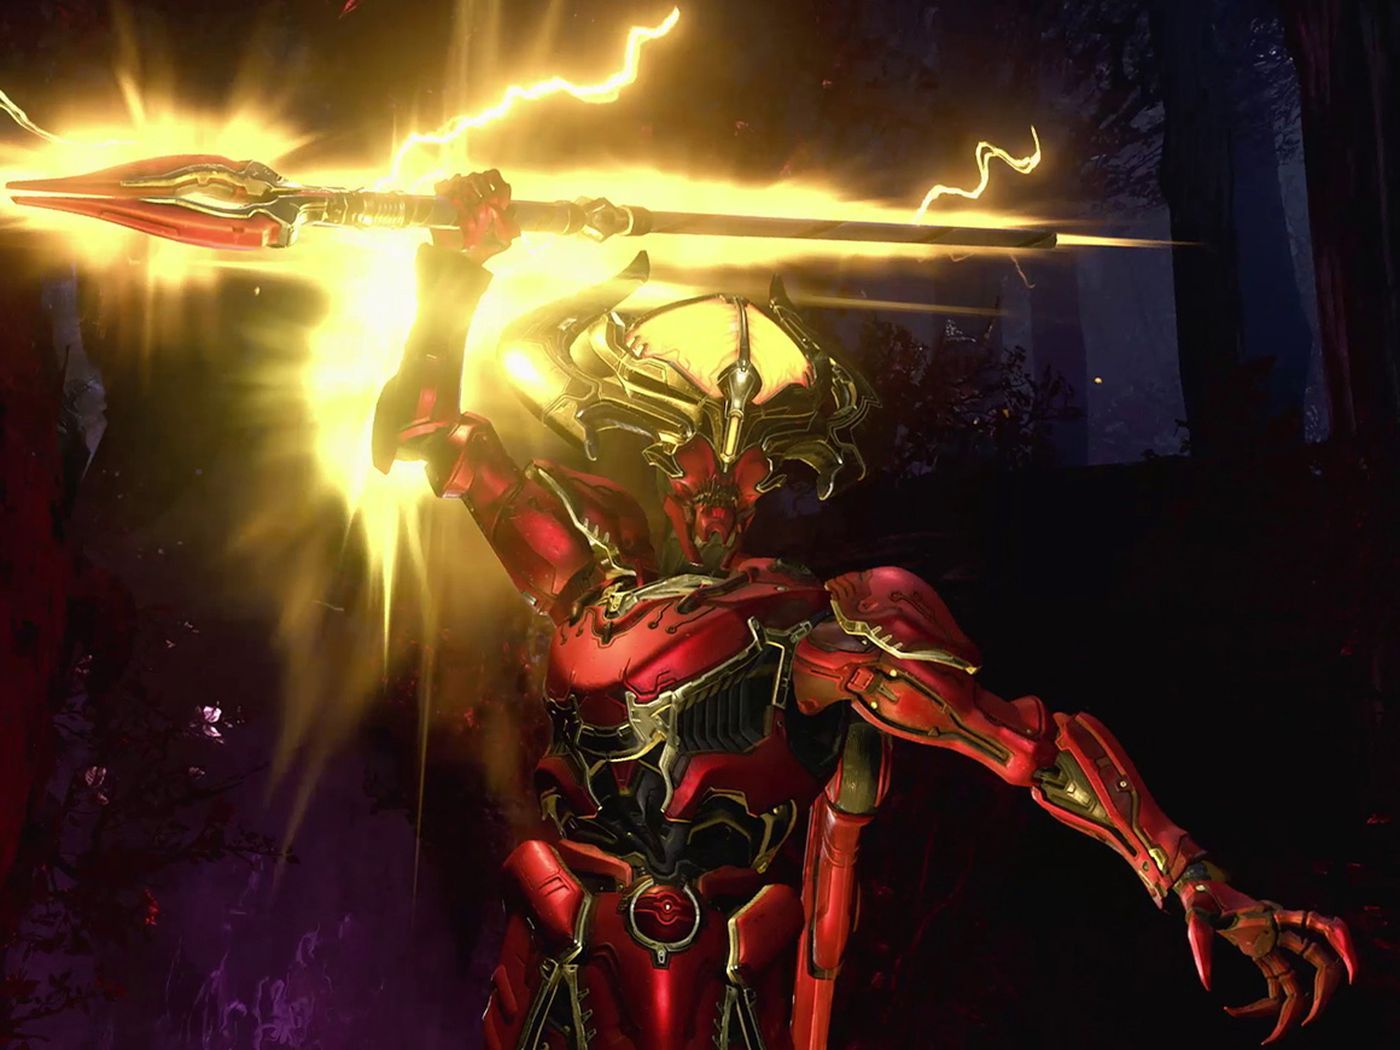 Doom Eternal's first DLC expansion, The Ancient Gods, arrives next month